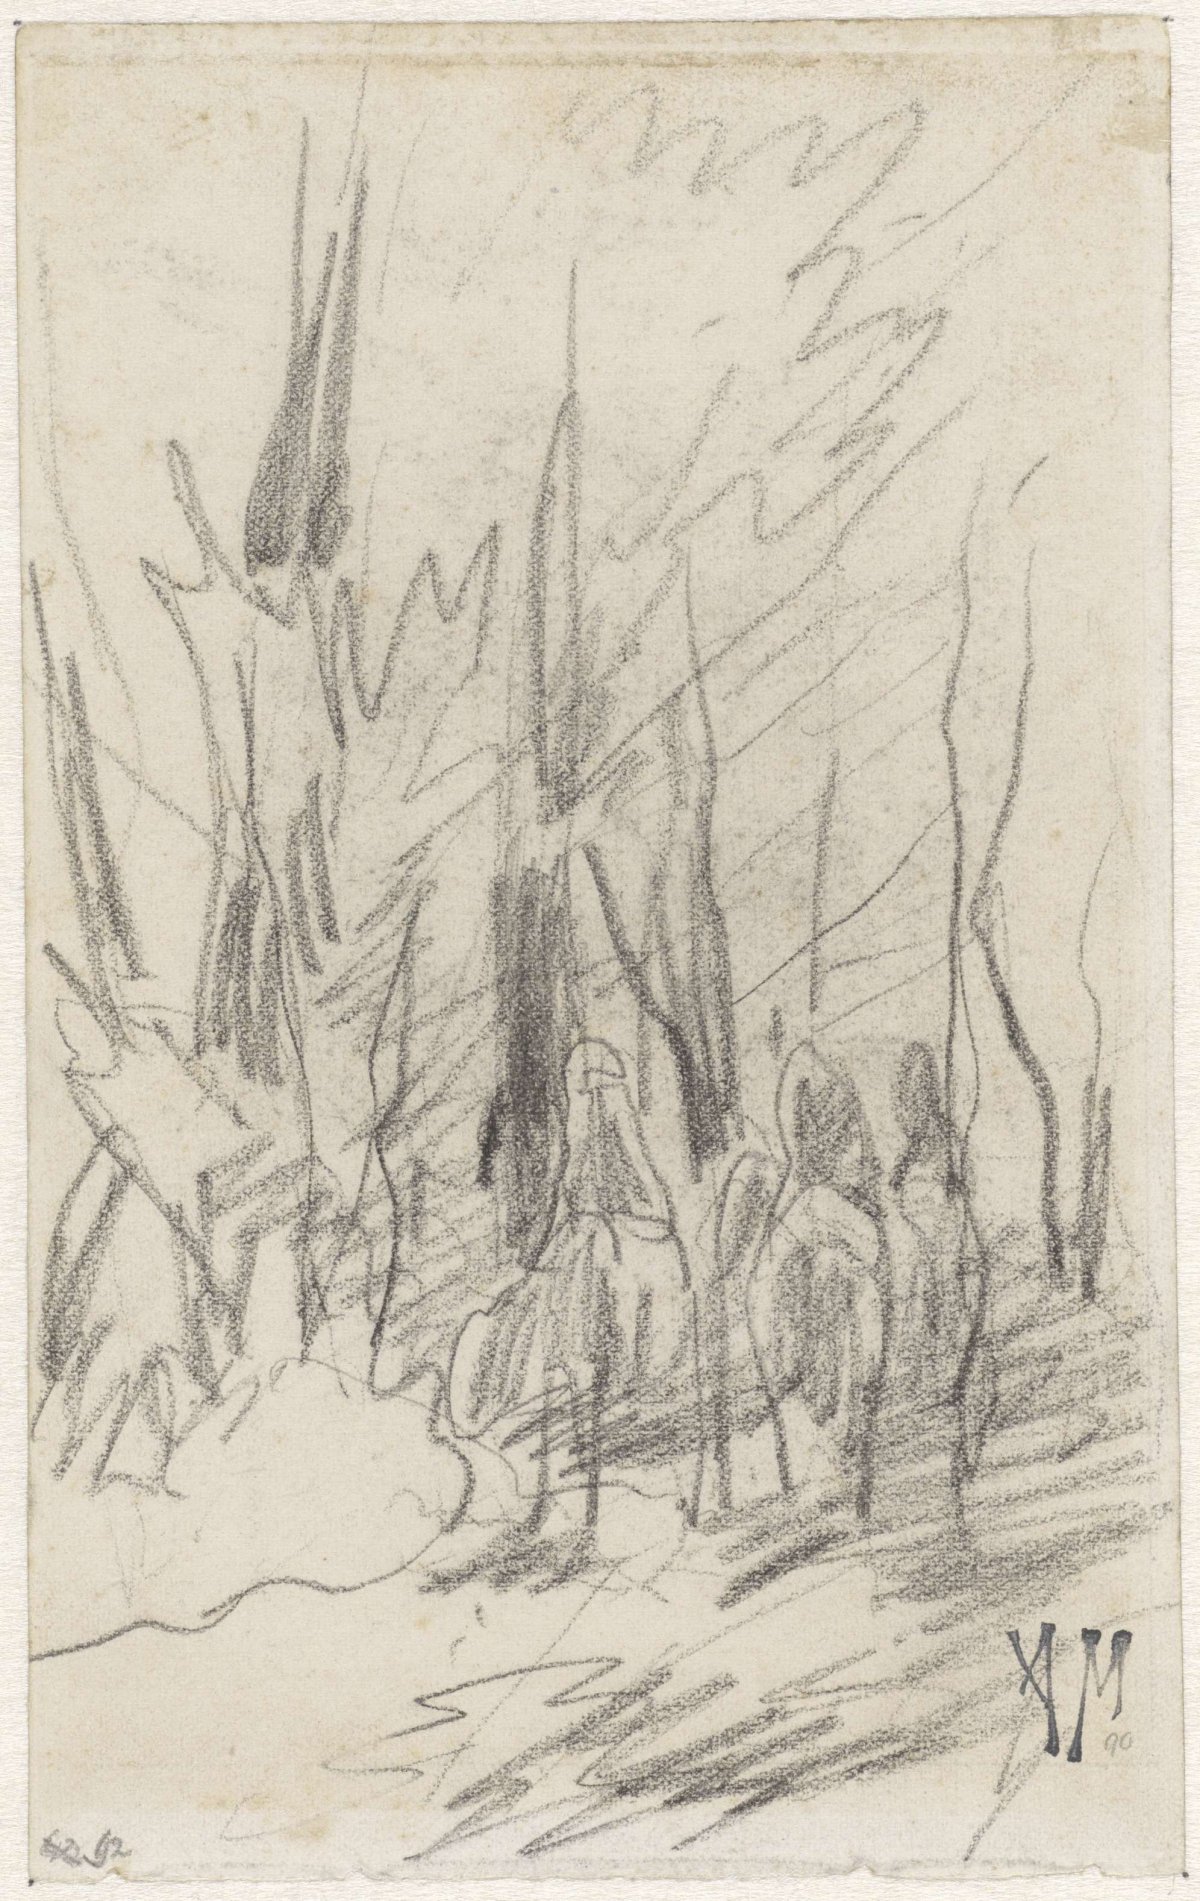 Three horsemen in a forest, Anton Mauve, 1848 - 1888